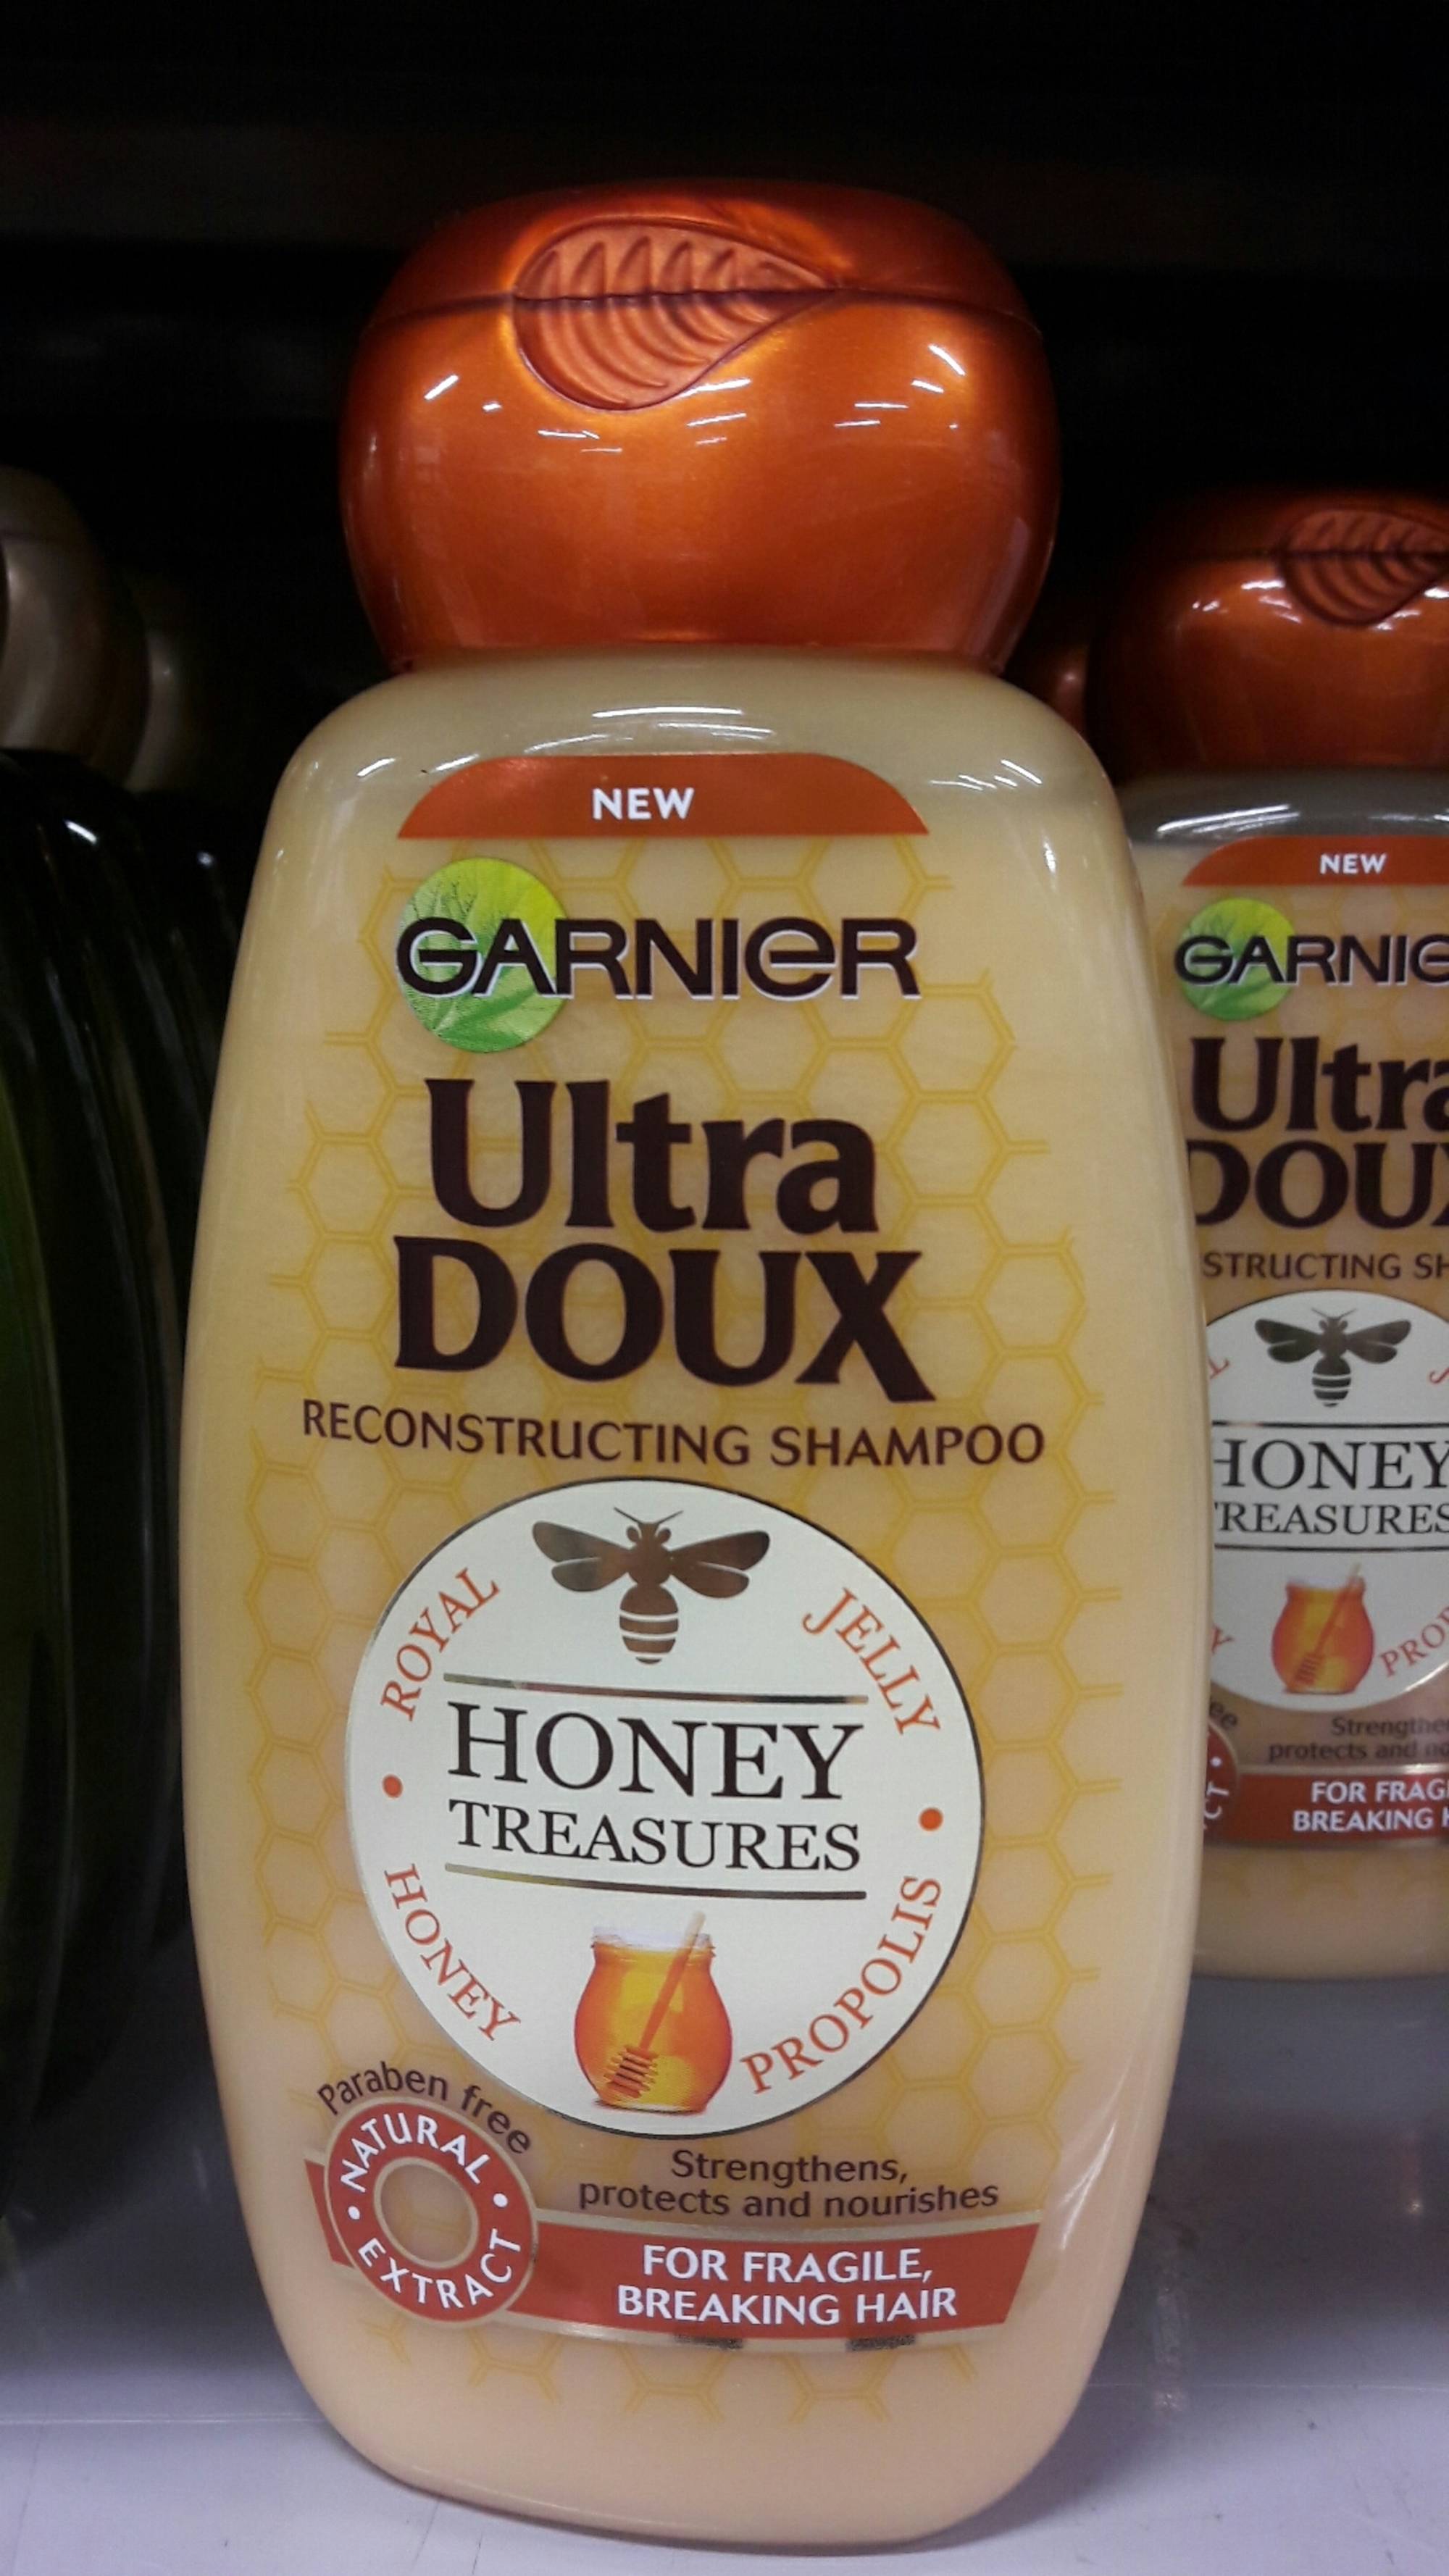 GARNIER - Ultra doux honey treasures - Reconstructing shampoo